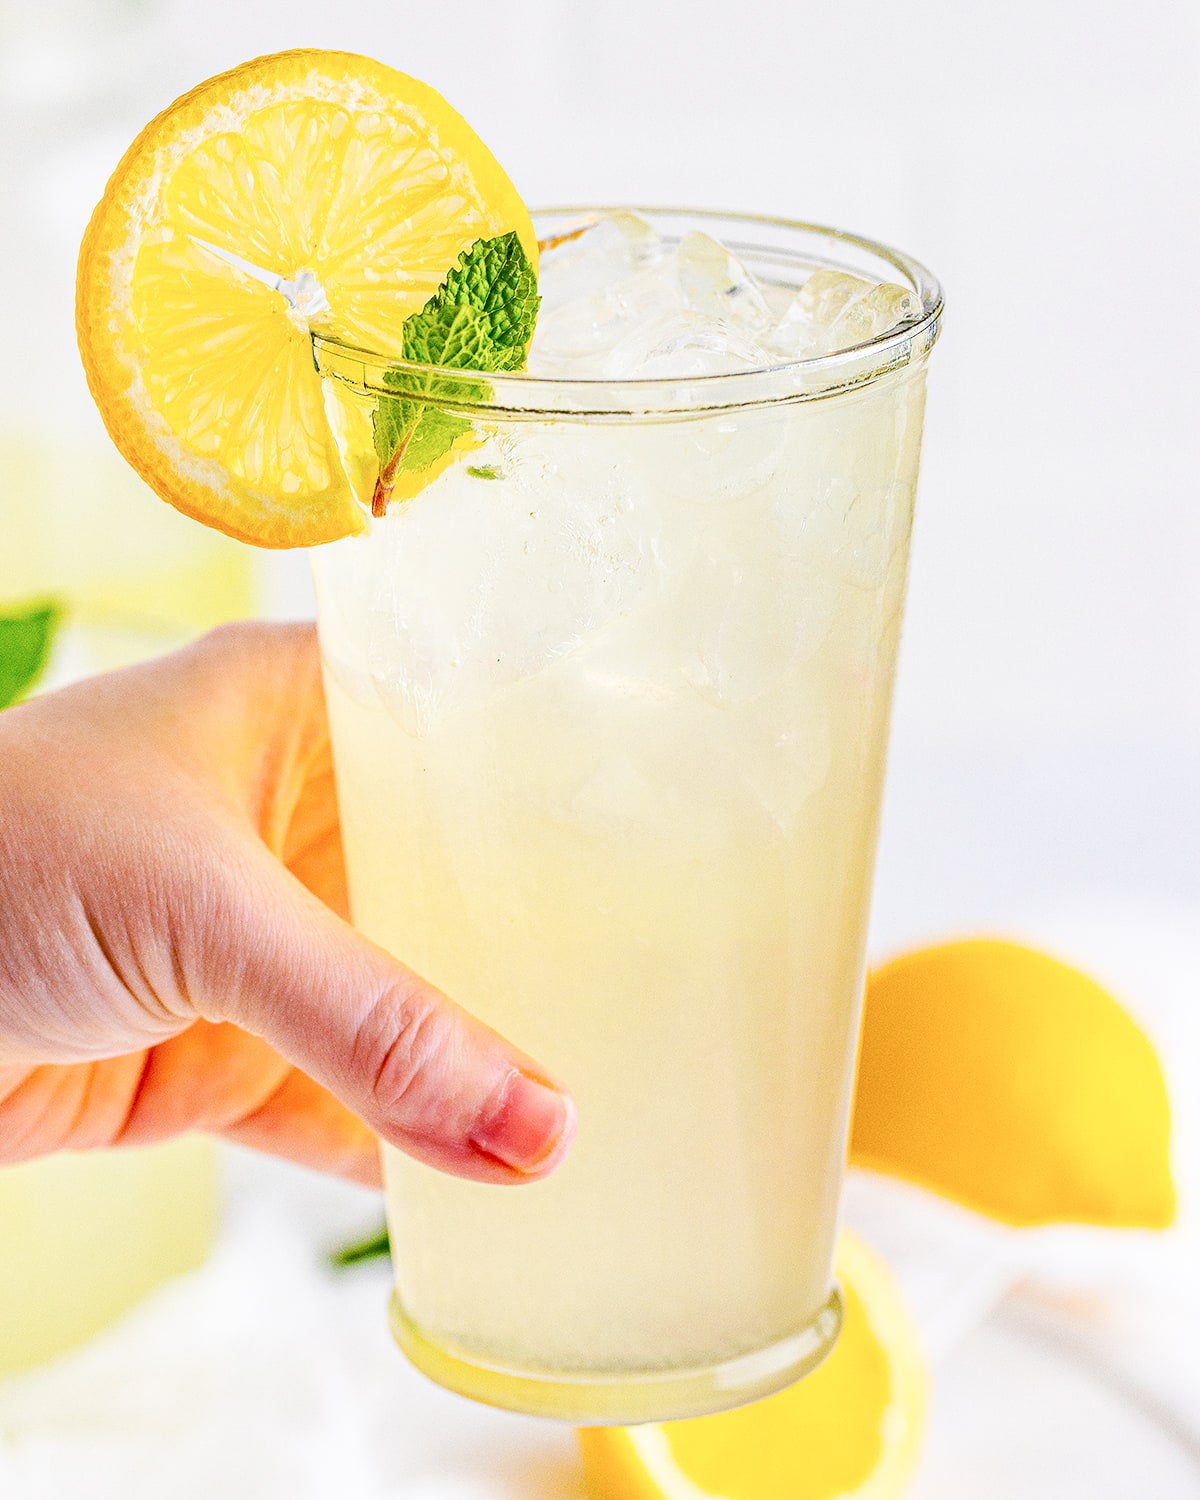 A hand holding a glass of iced lemonade.